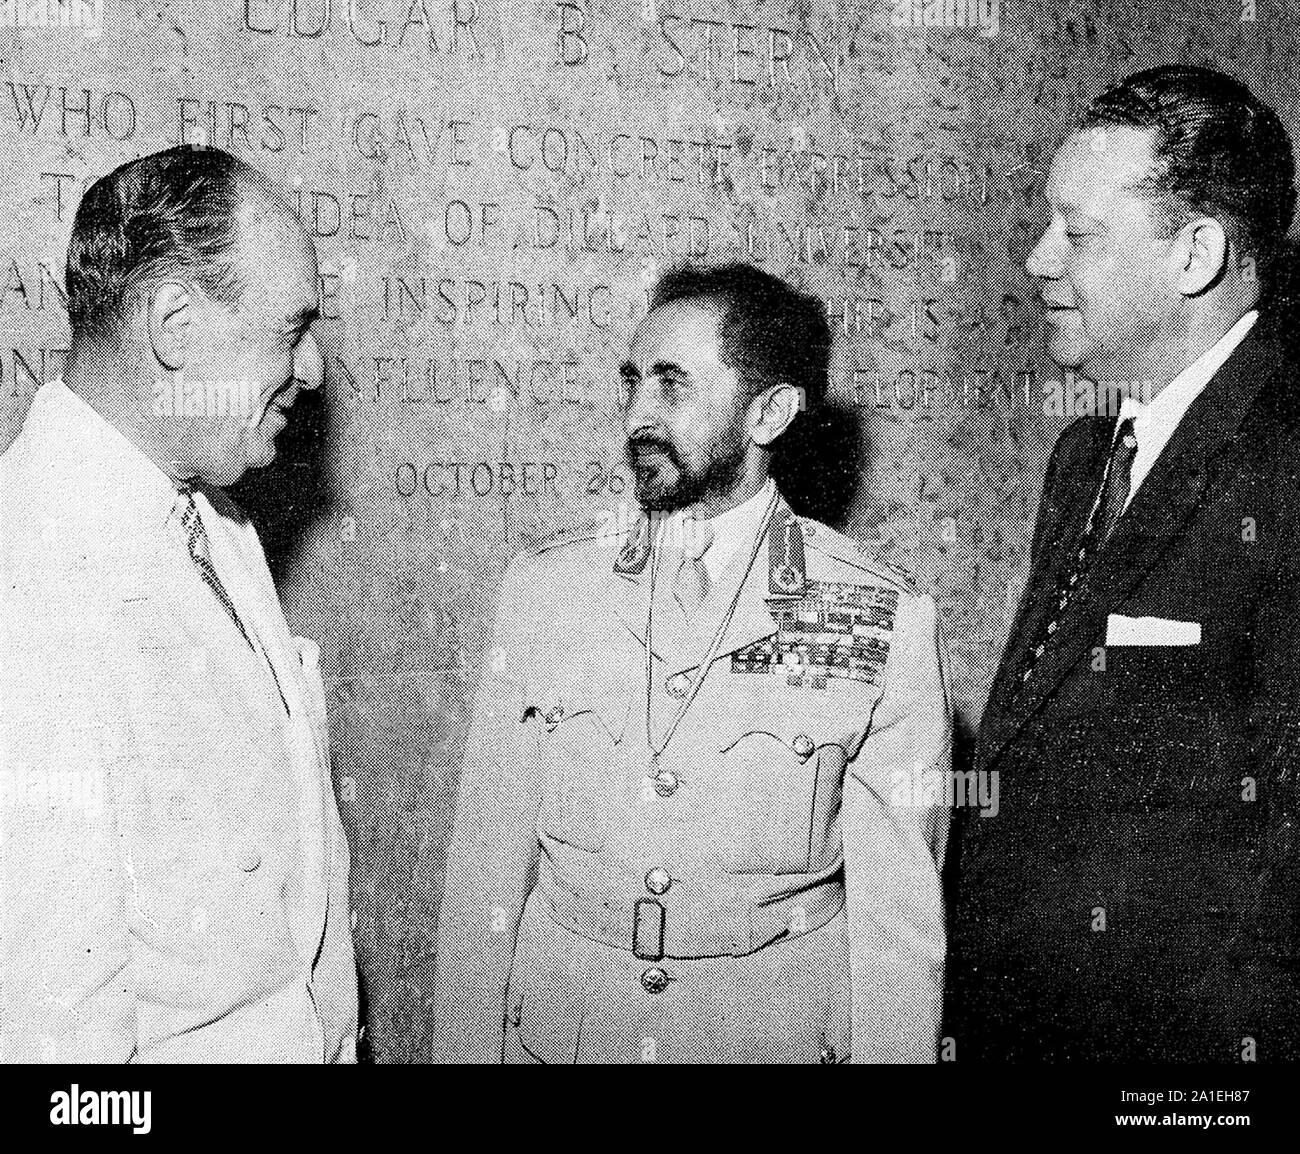 Emperor Haile Selassie I of Ethiopia, standing with Edgar B. Stern and Dr. Albert W. Dent (Former President of Dillard University). 1954. Stock Photo